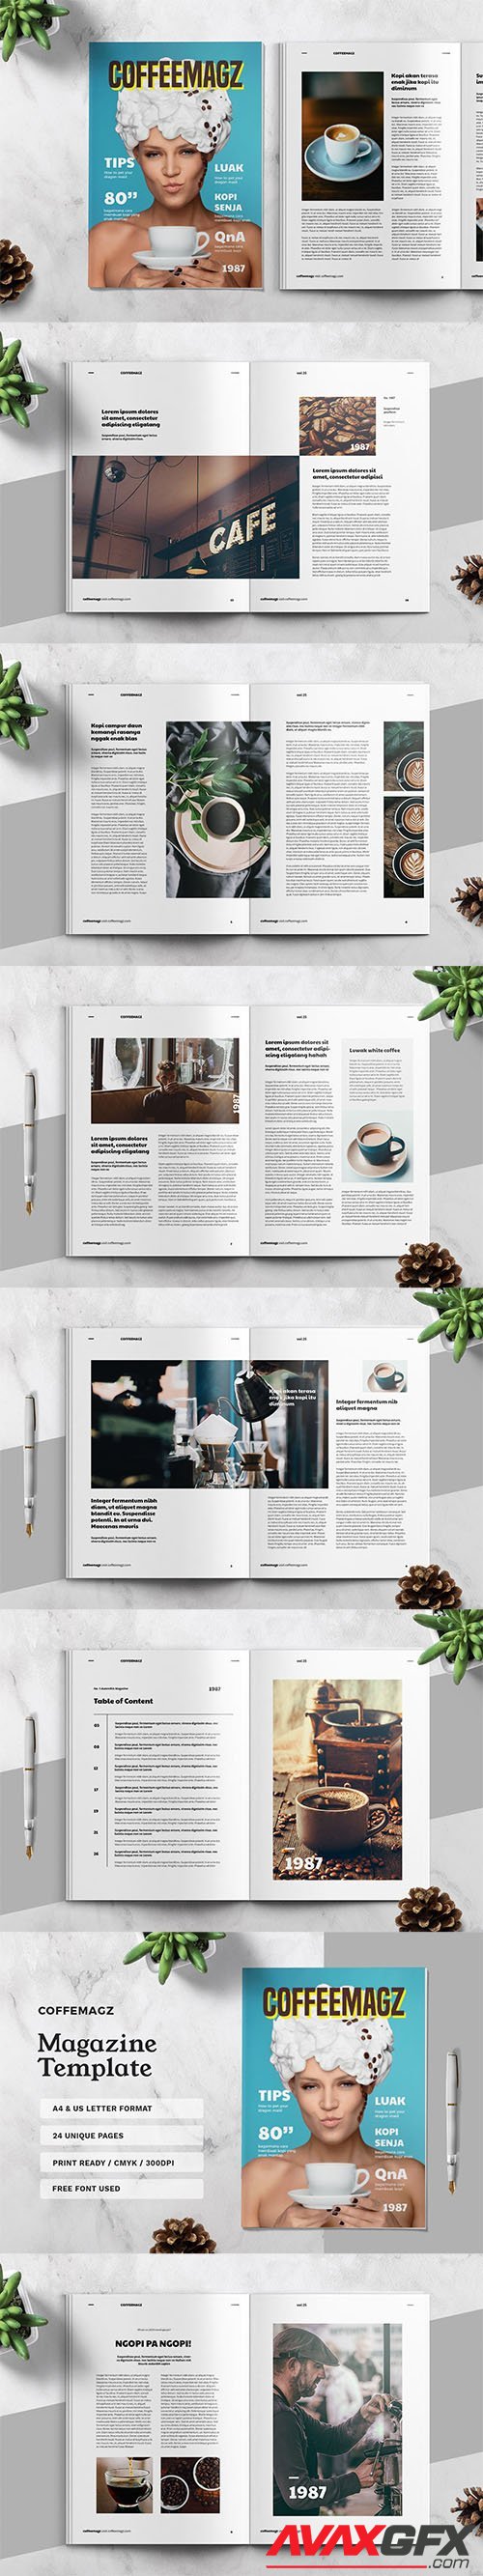 COFFEE - Magazine Template